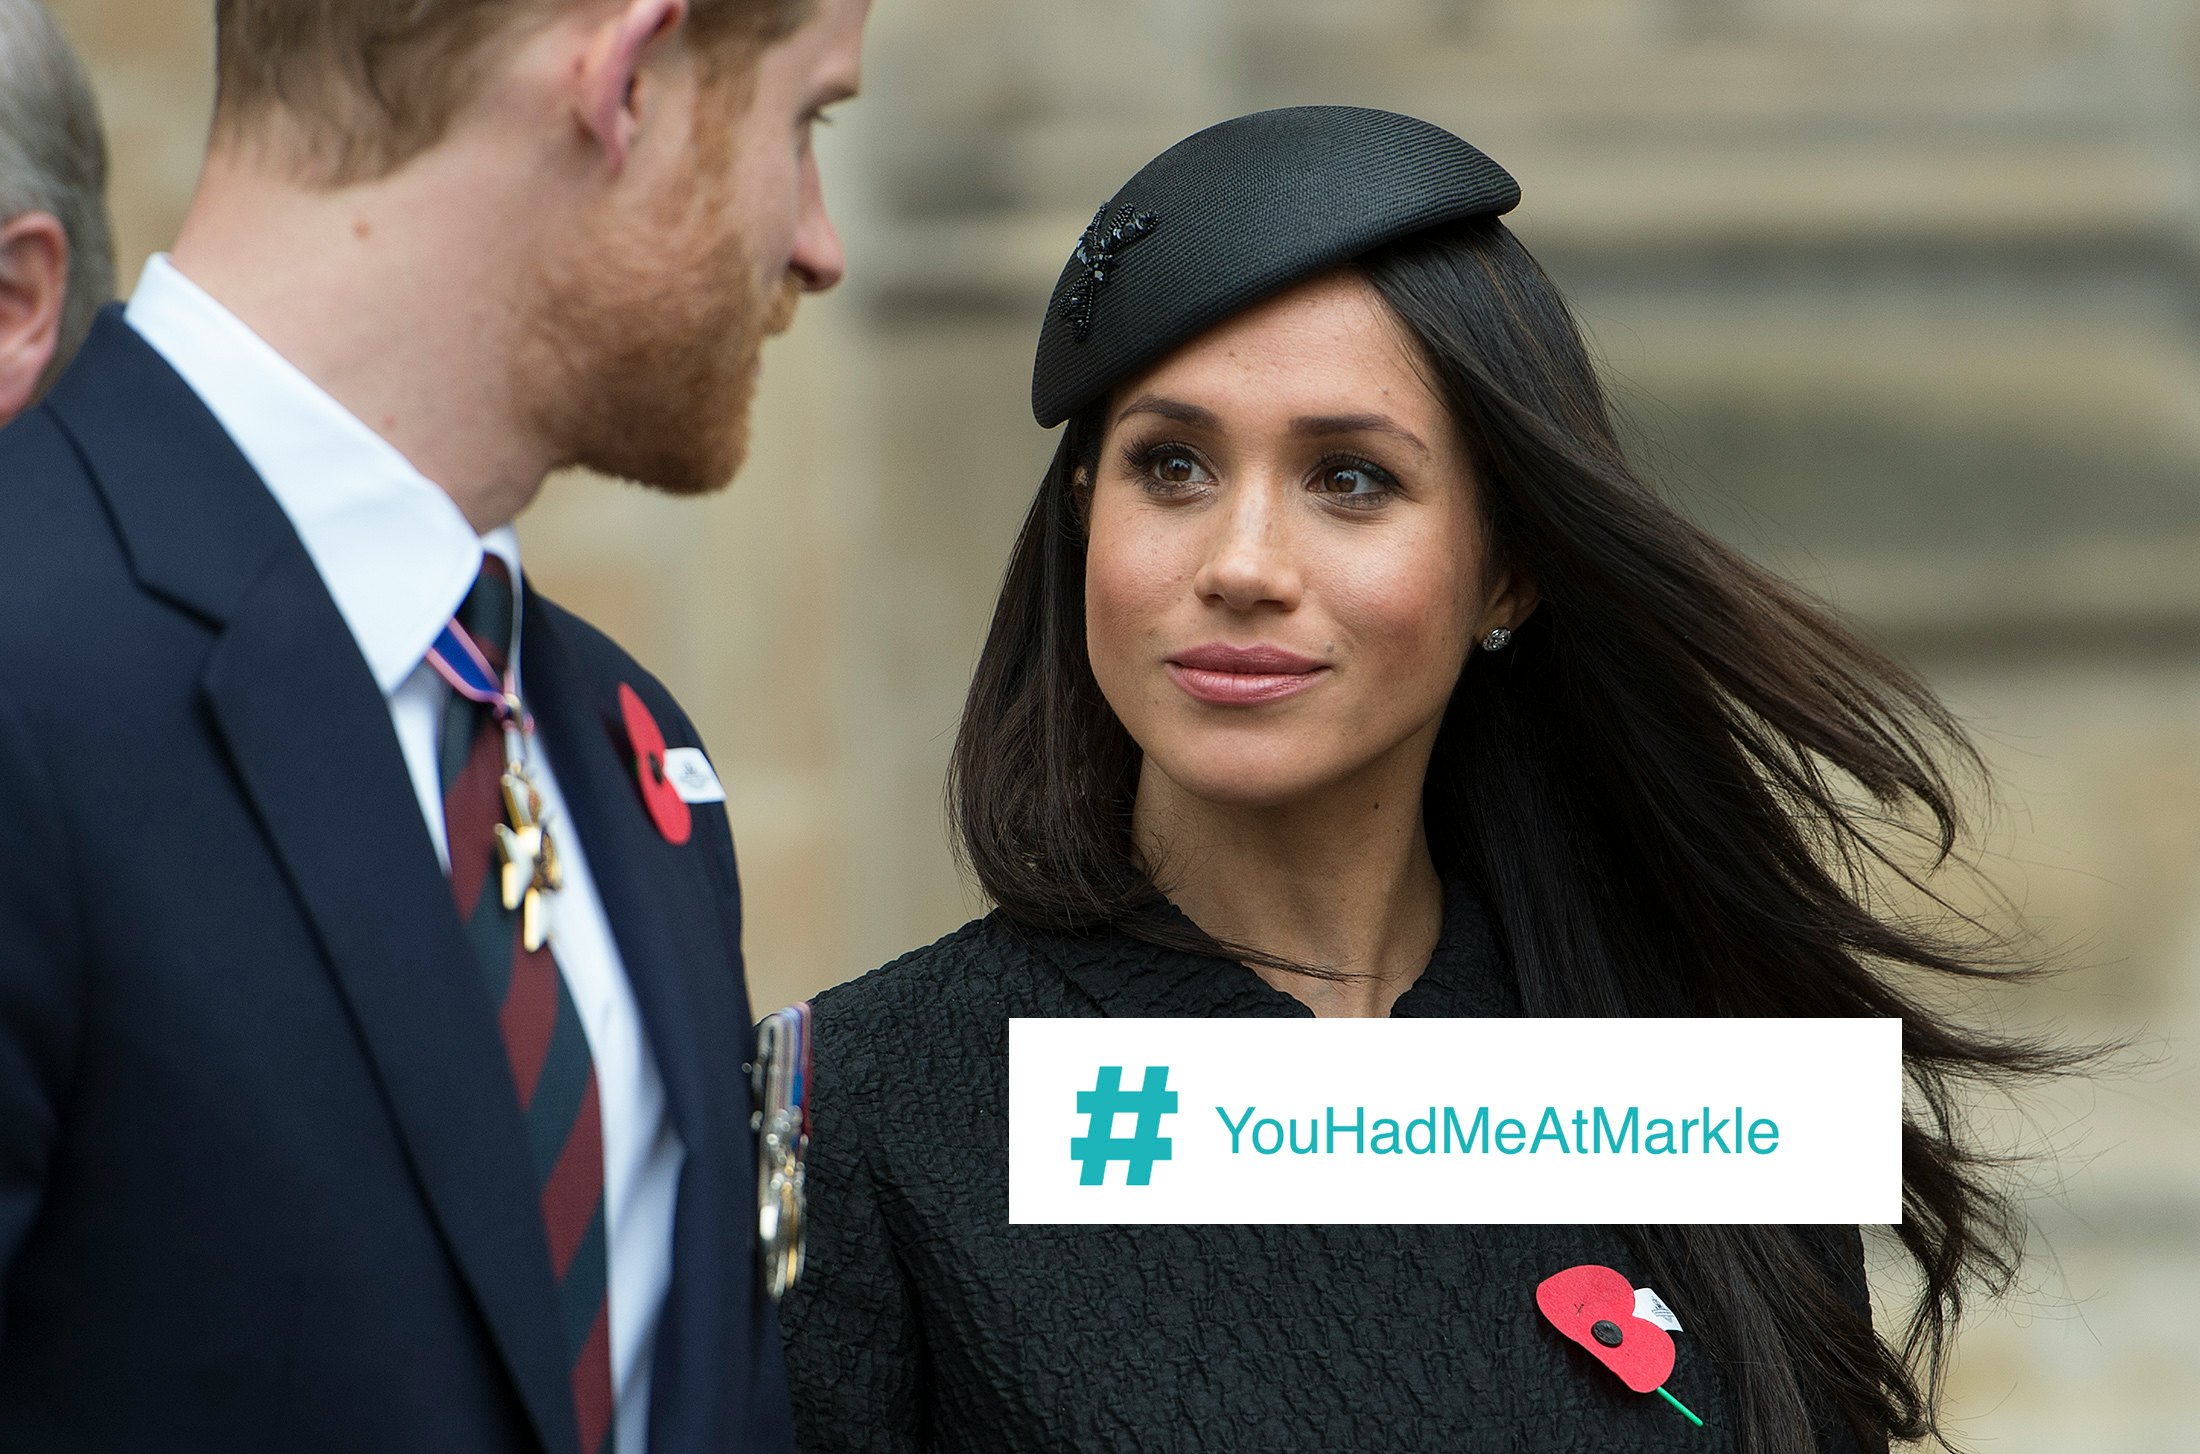 Image of the royal wedding hashtags